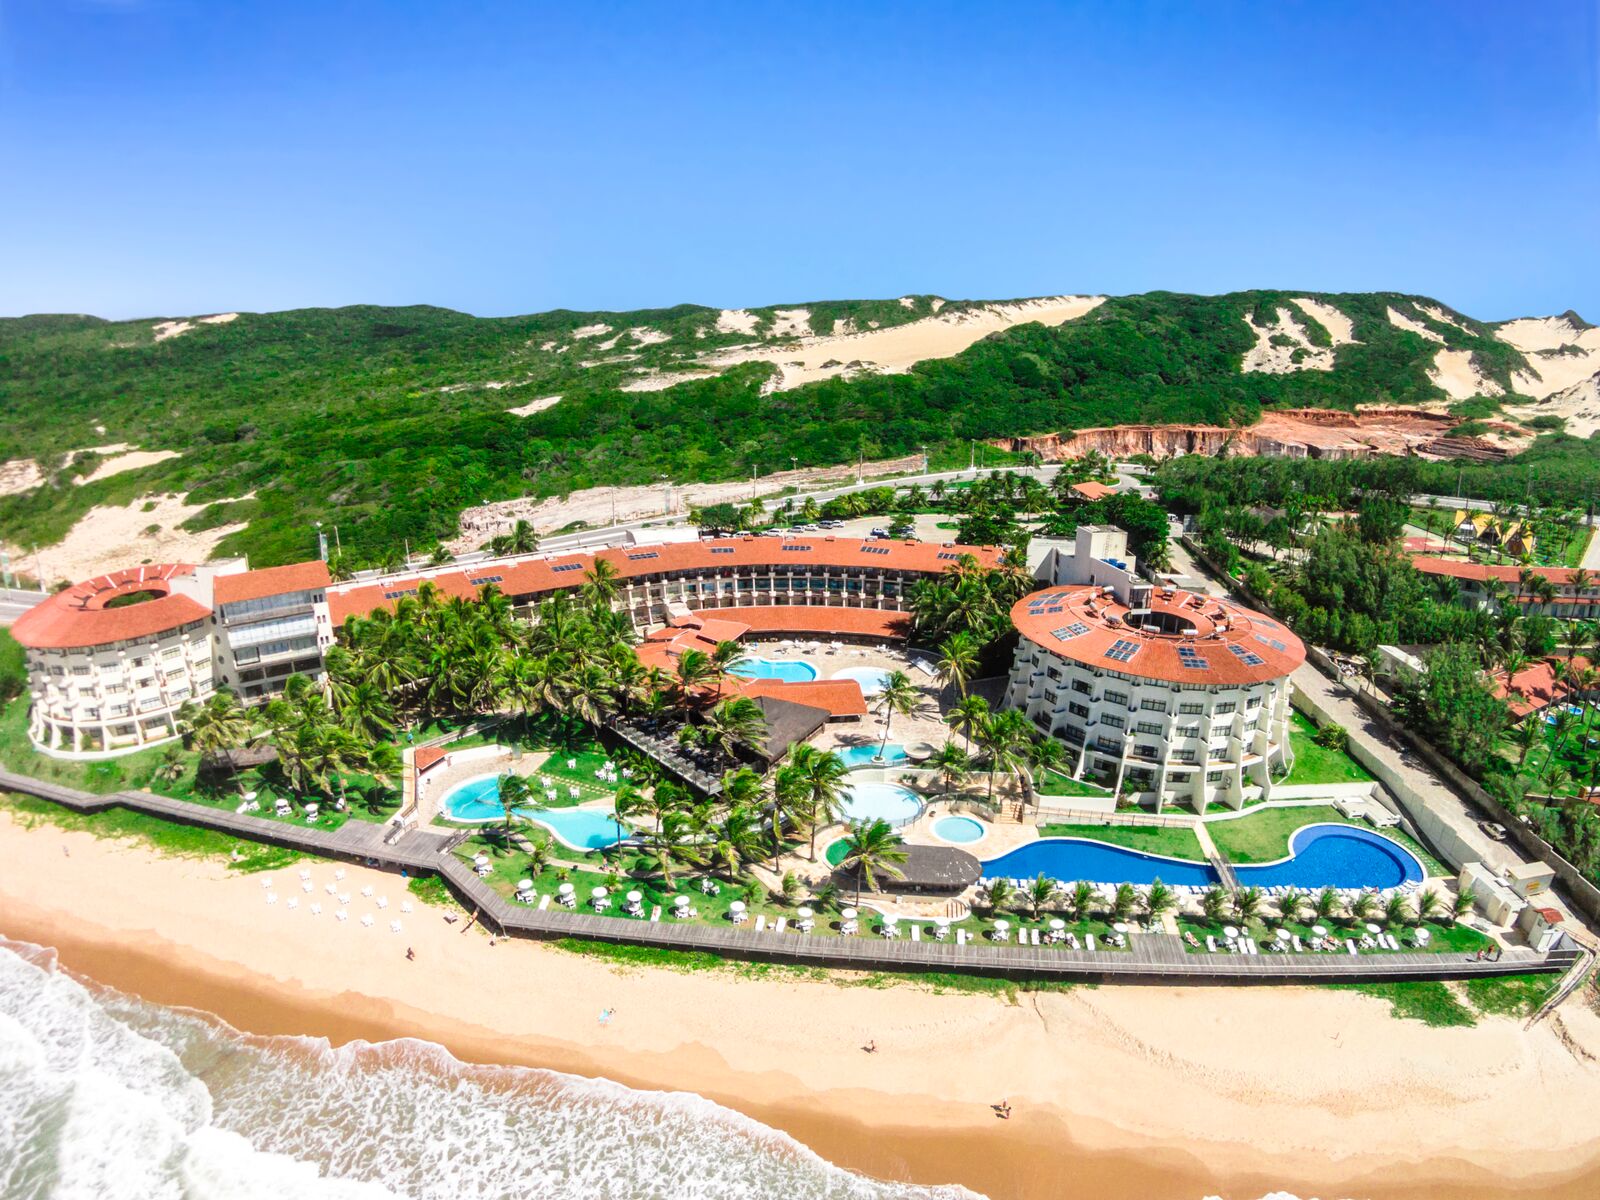 Via costeira de Natal: Descubra os Hotéis e Charme da Praia | Natal Praias